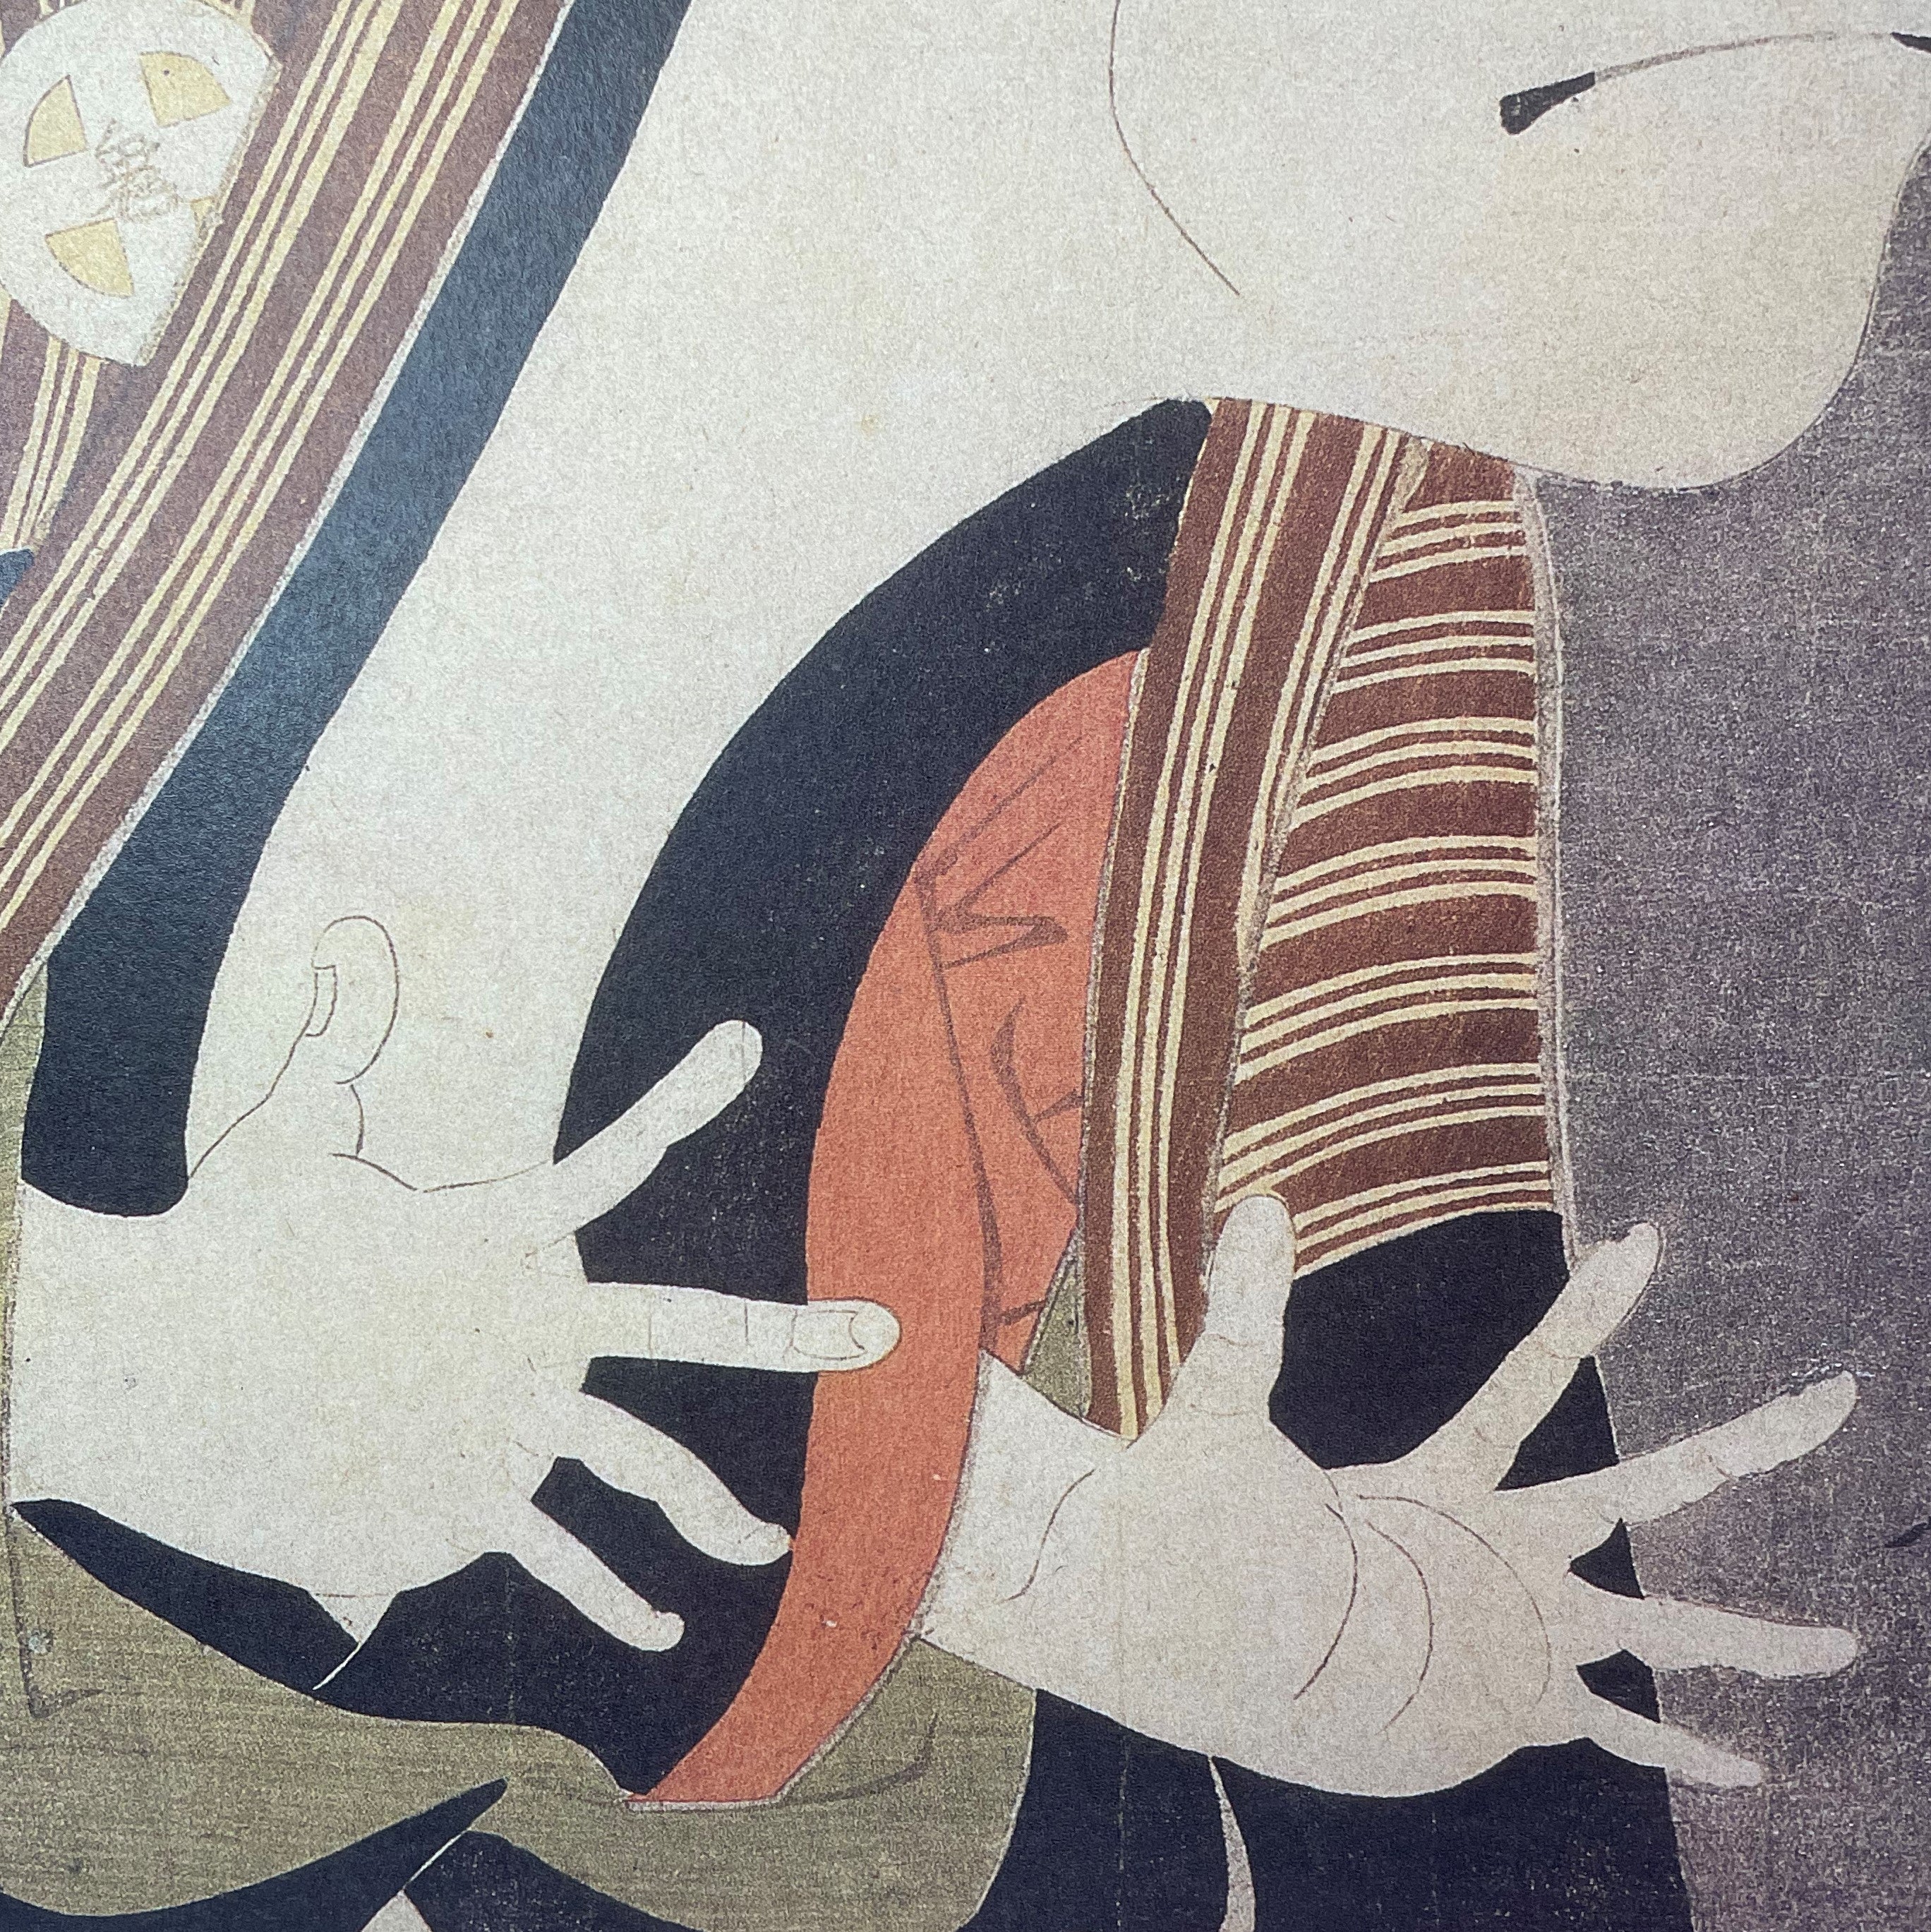 Kabuki-Otani Oniji by Sharaku (Machine Print)